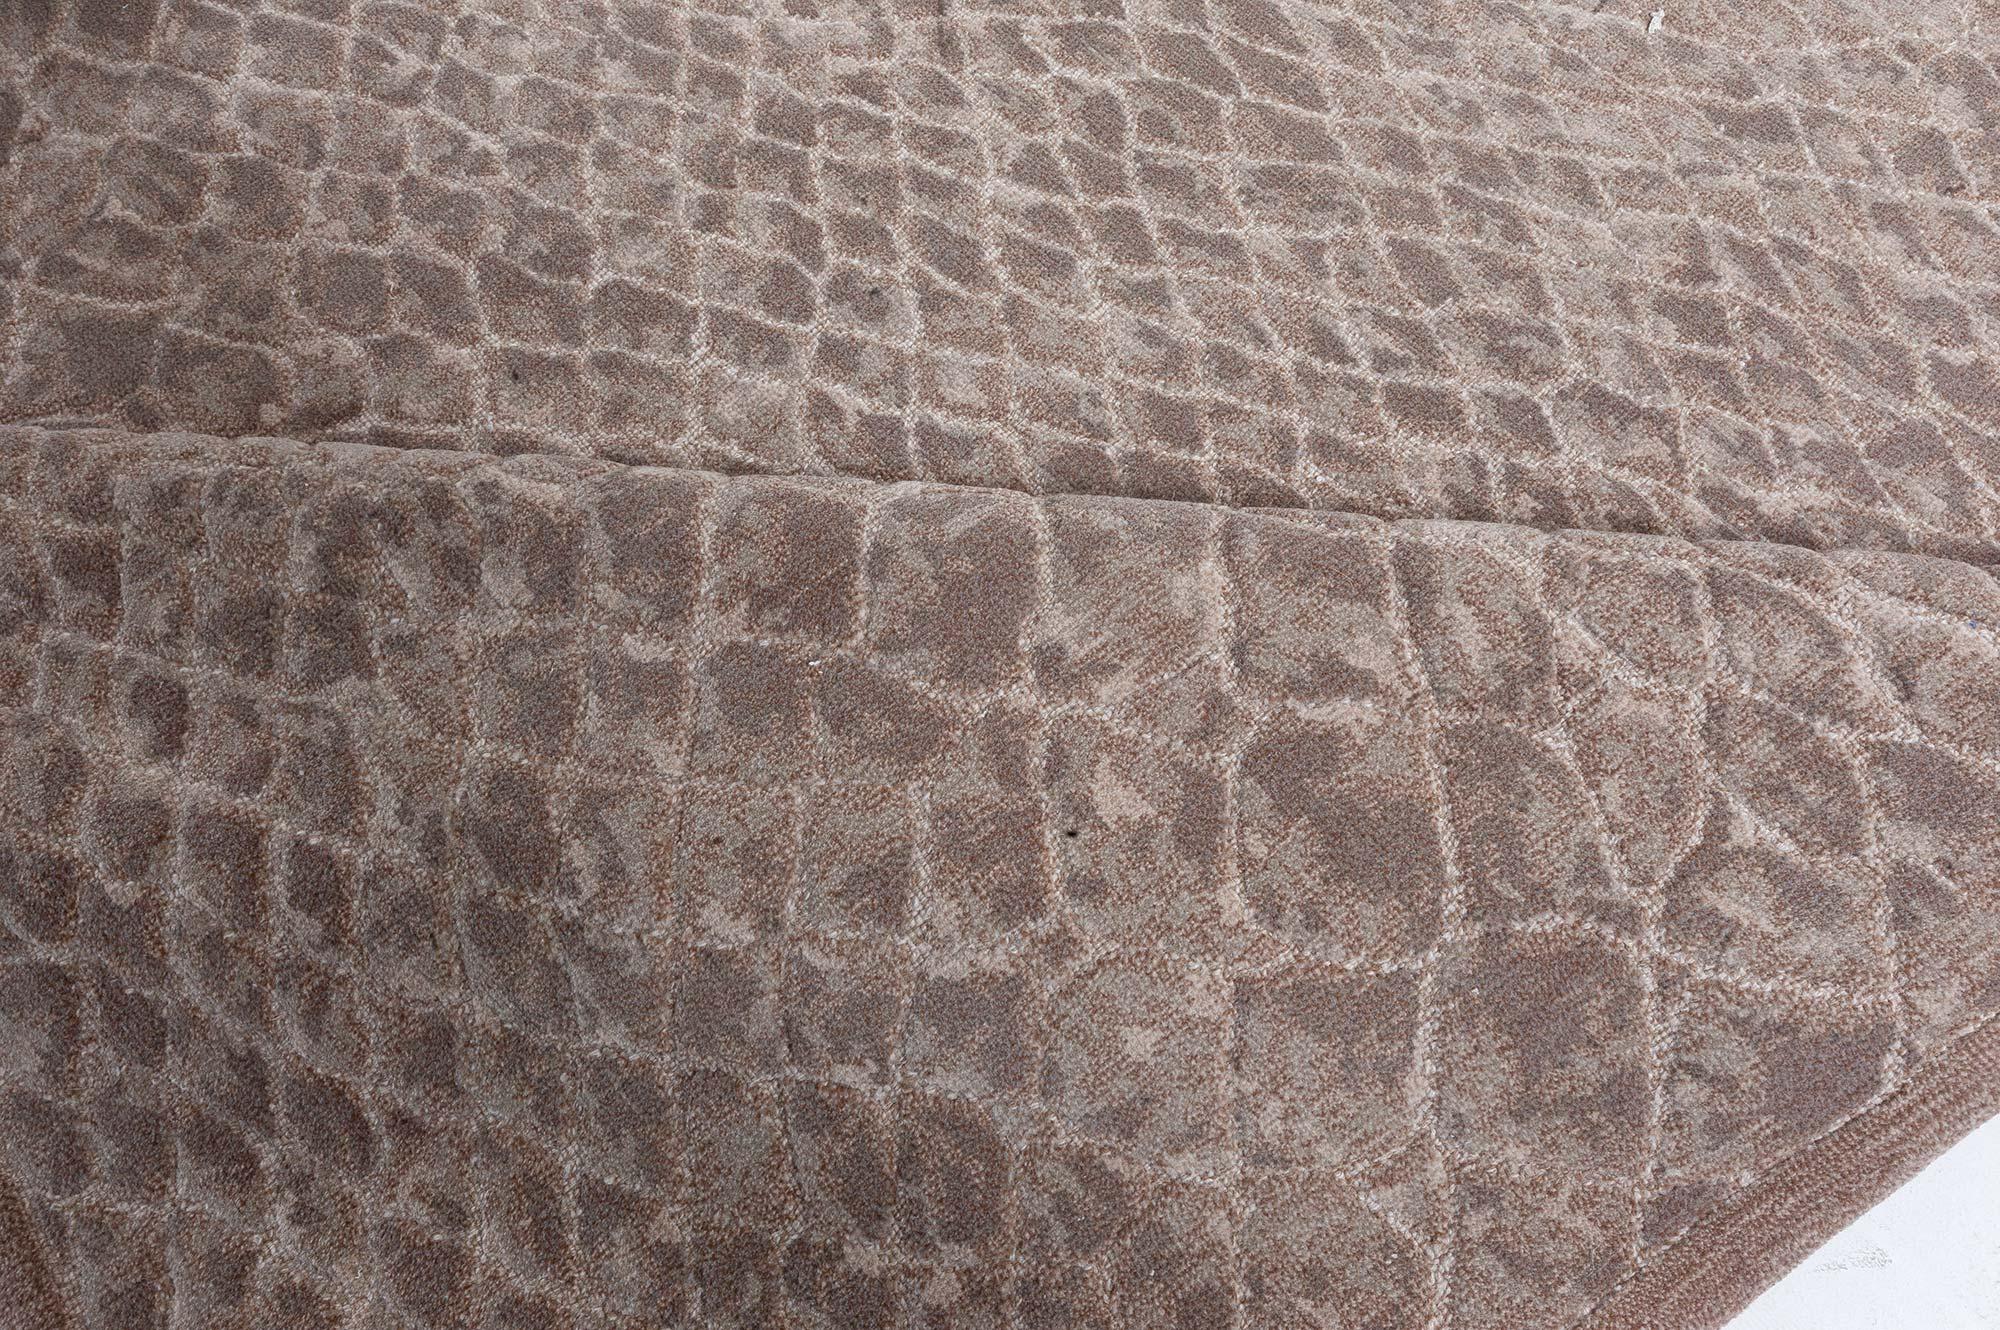 Contemporary snake skin design handmade wool rug by Doris Leslie Blau.
Size: 12.0